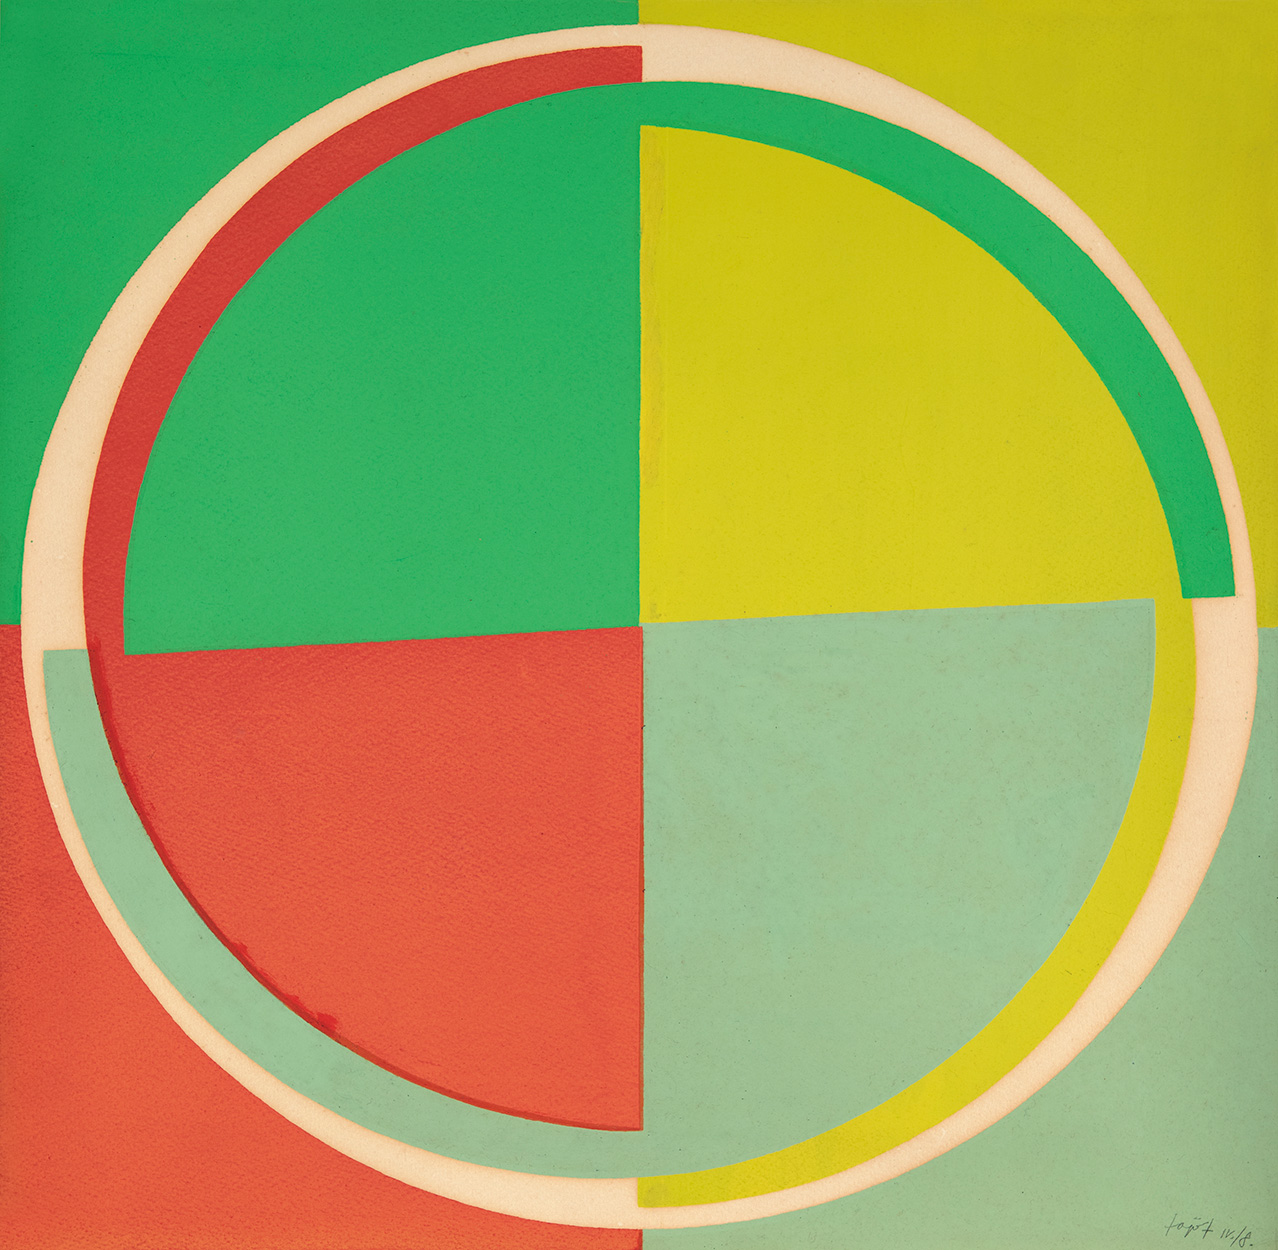 Fajó János (1937-2018) Composition, Folder of 1968